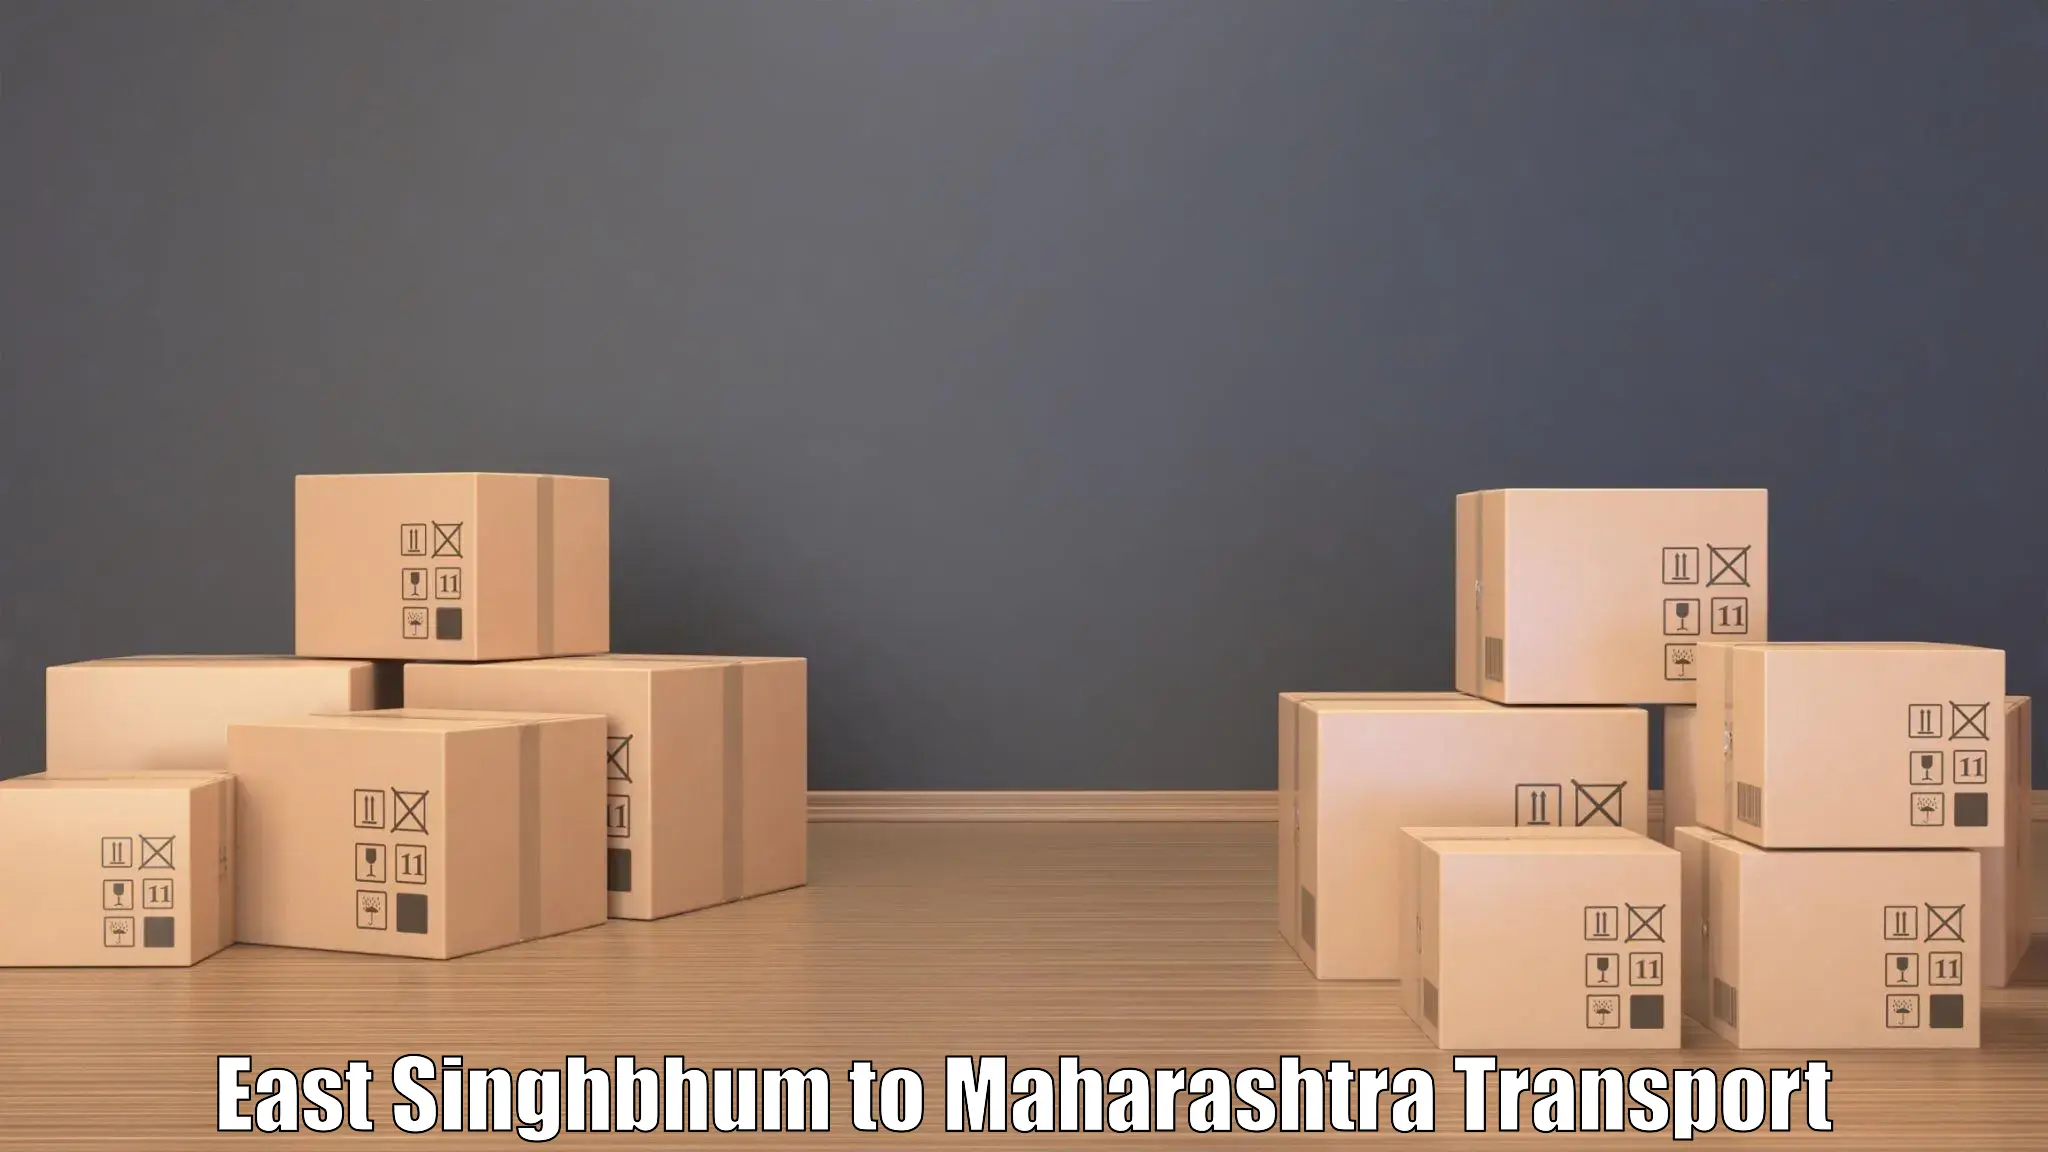 Online transport service East Singhbhum to Rajgurunagar